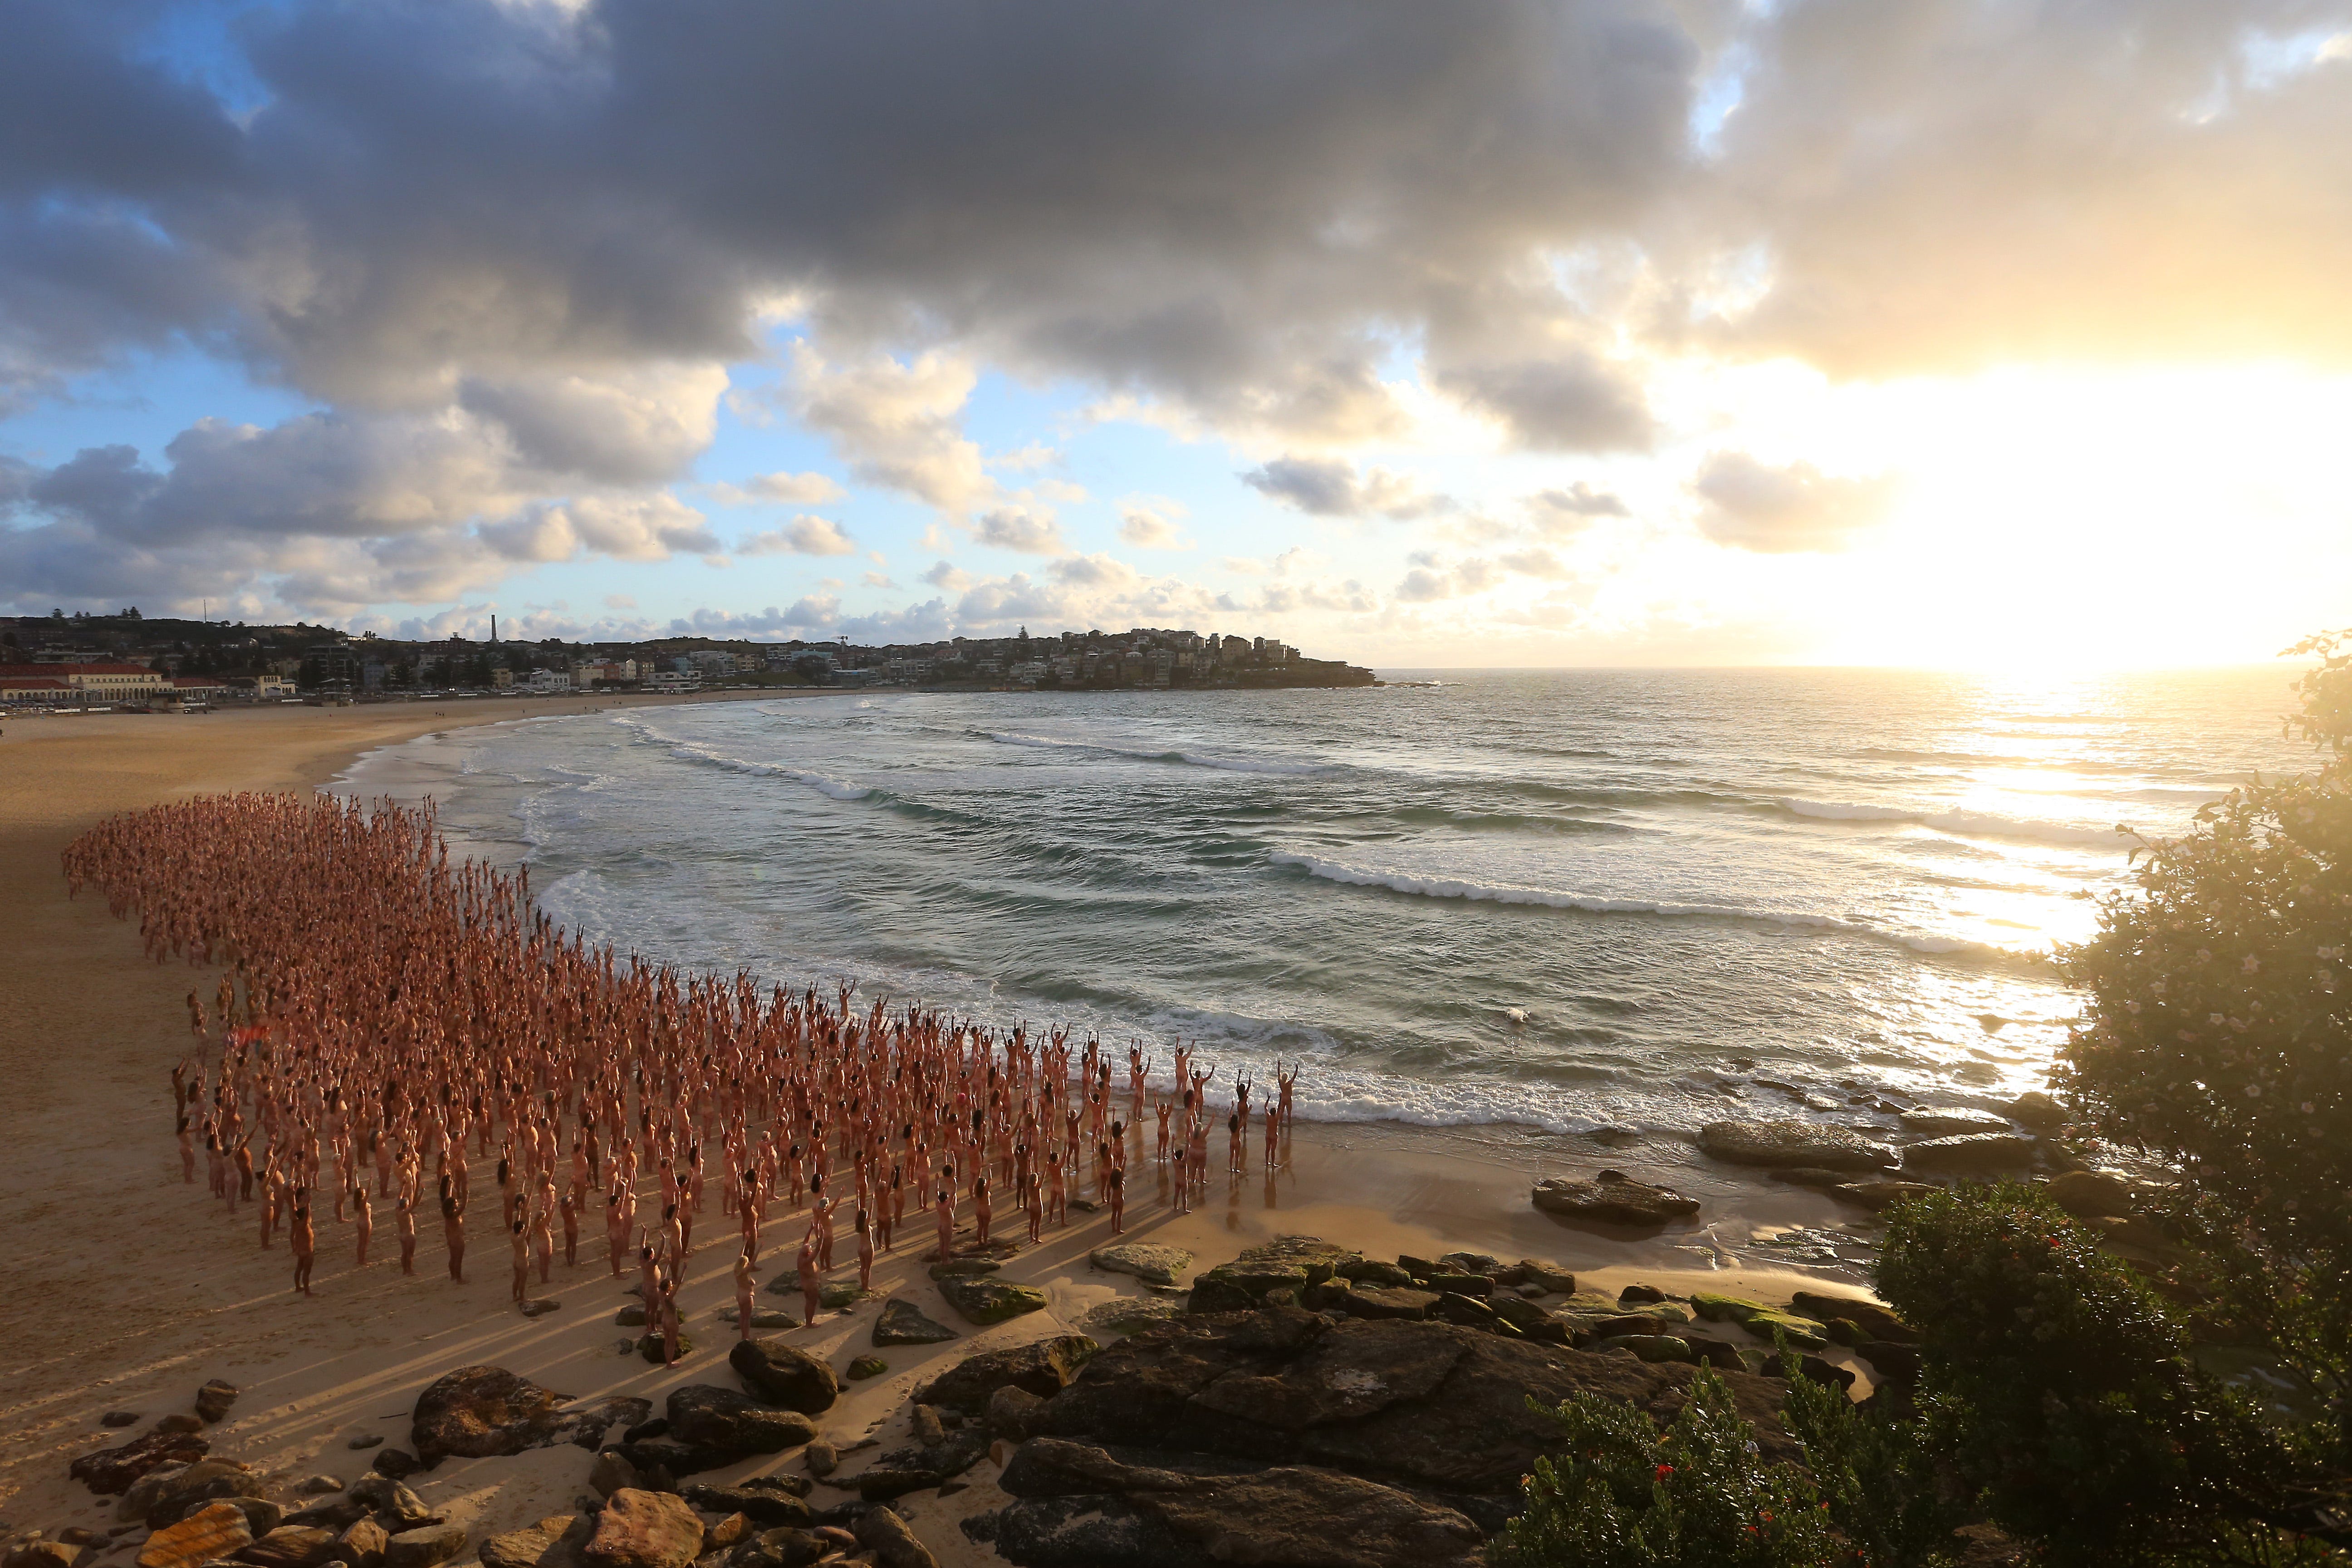 Beach Nude Girls - Thousands pose nude at Australian beach in Spencer Tunick photo shoot